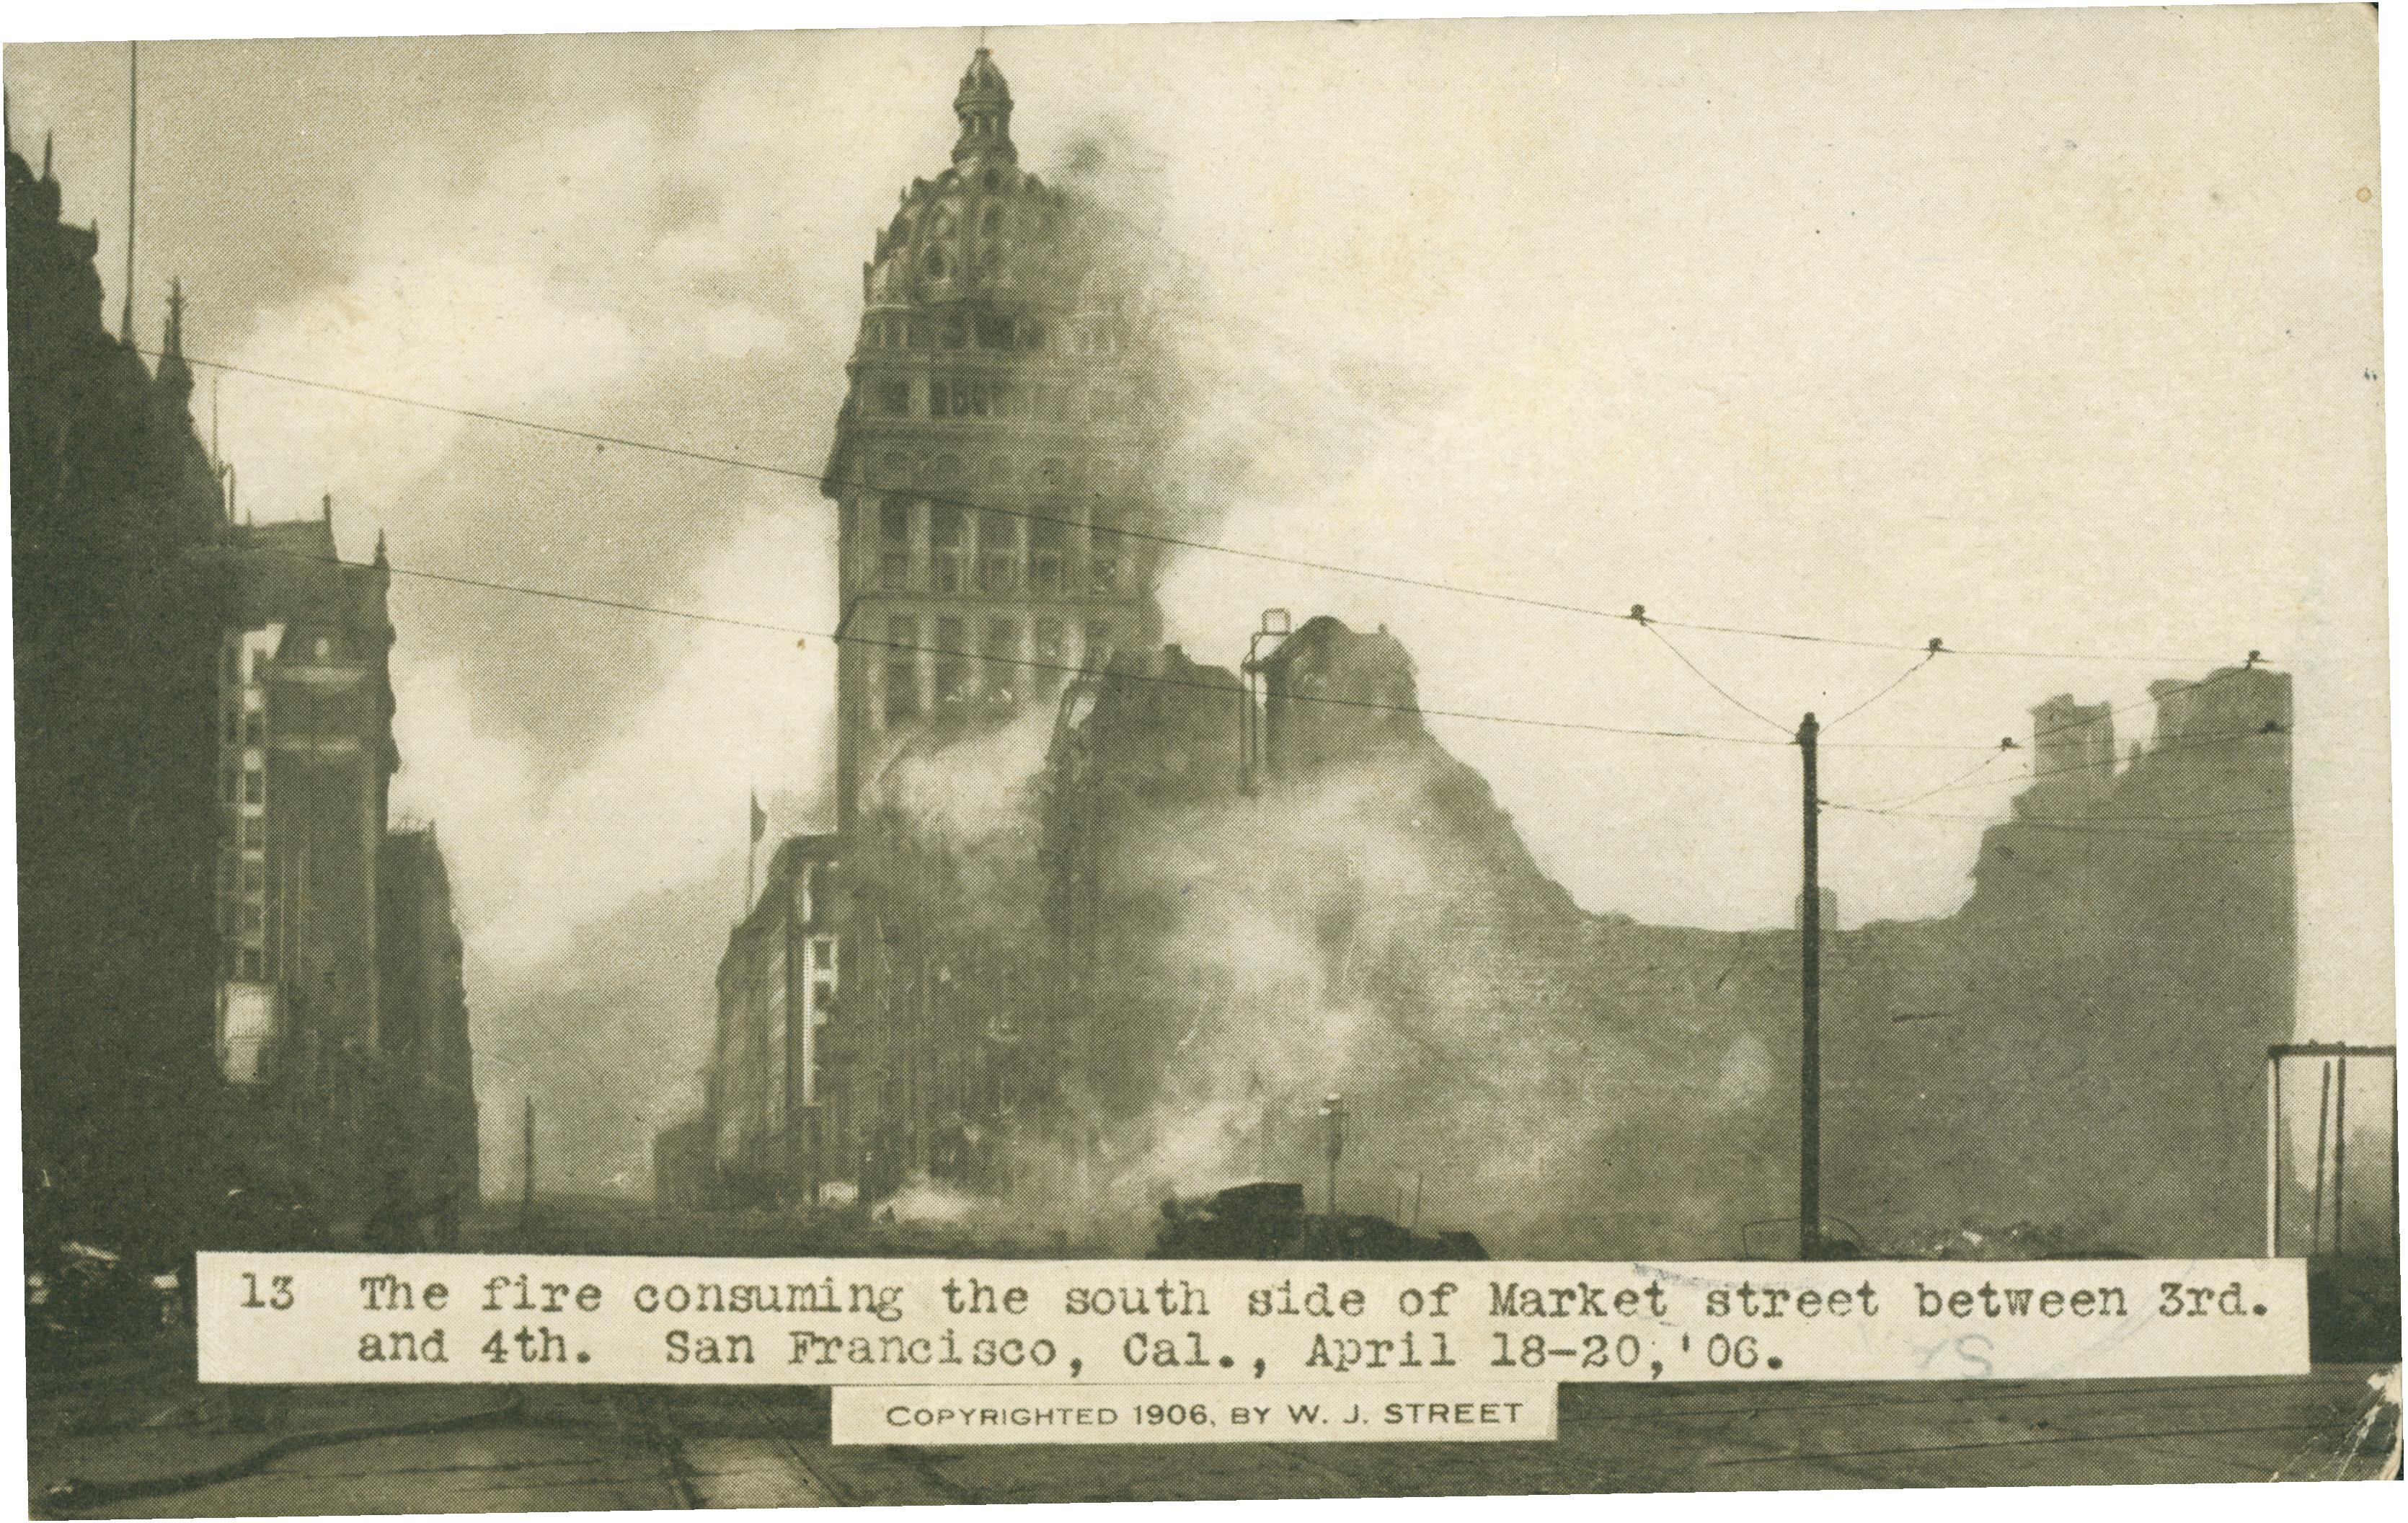 Shows several buildings on fire along Market Street, San Francisco, California.